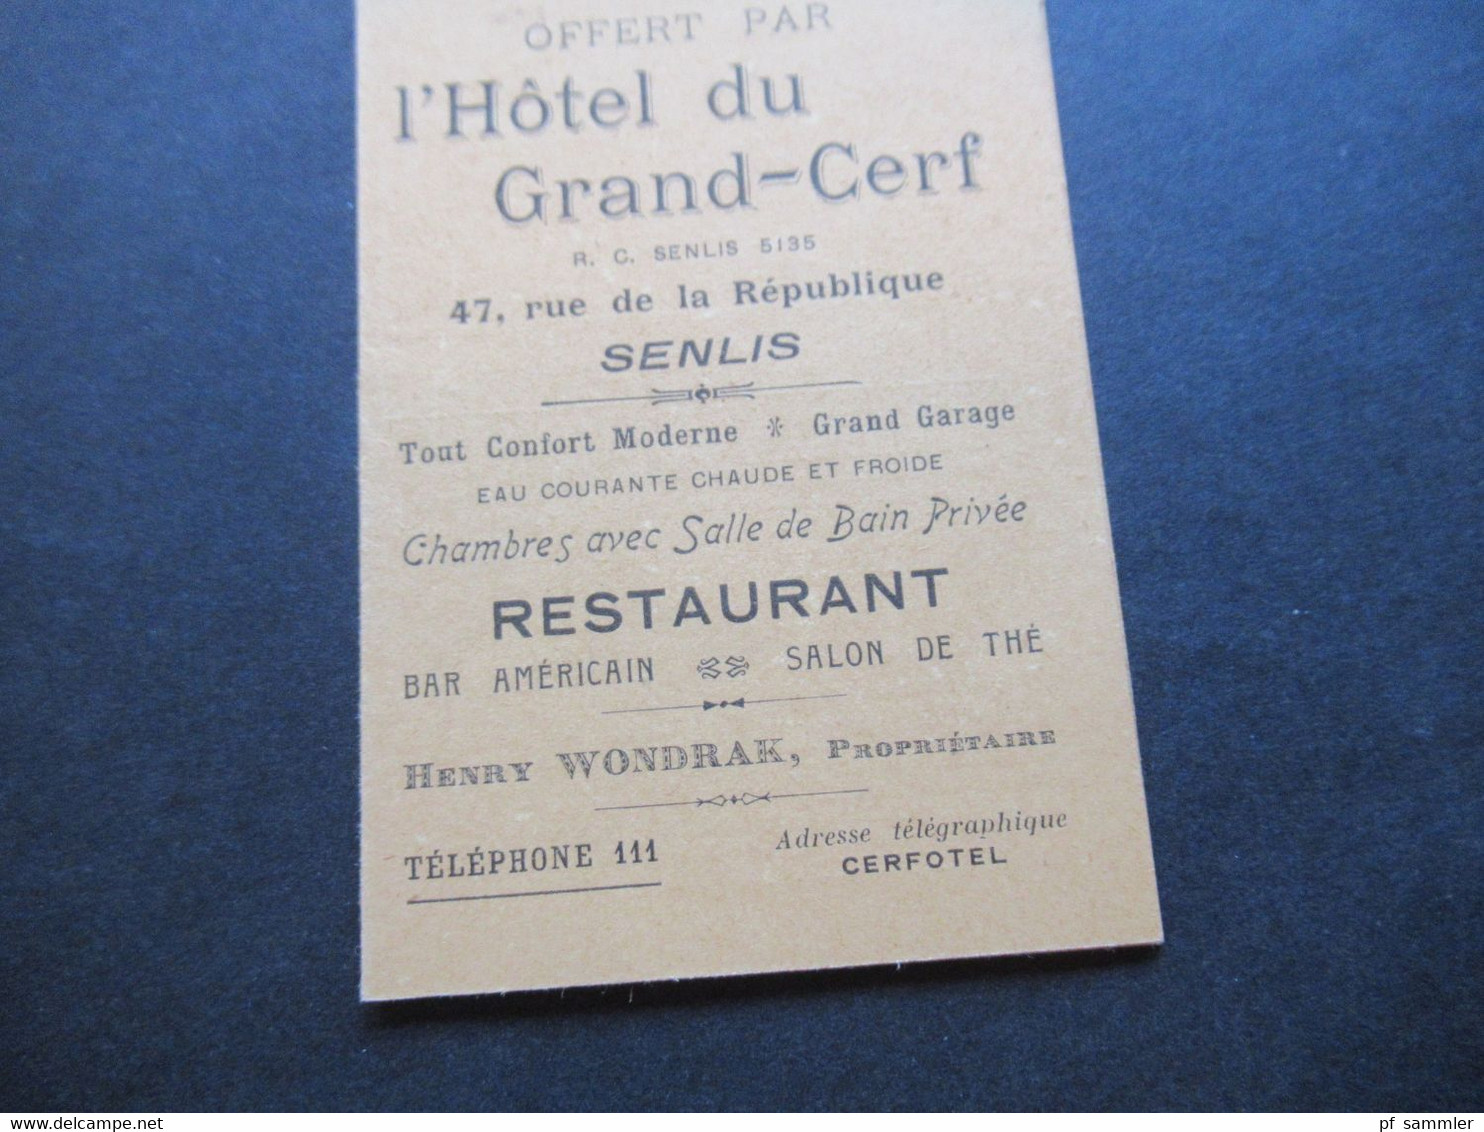 Frankreich Horaire Des Trains / Zugfahrplan Offert Par L'Hotel Du Grand Cerf Senlis Avec Restaurant Henry Wondrak - Europe